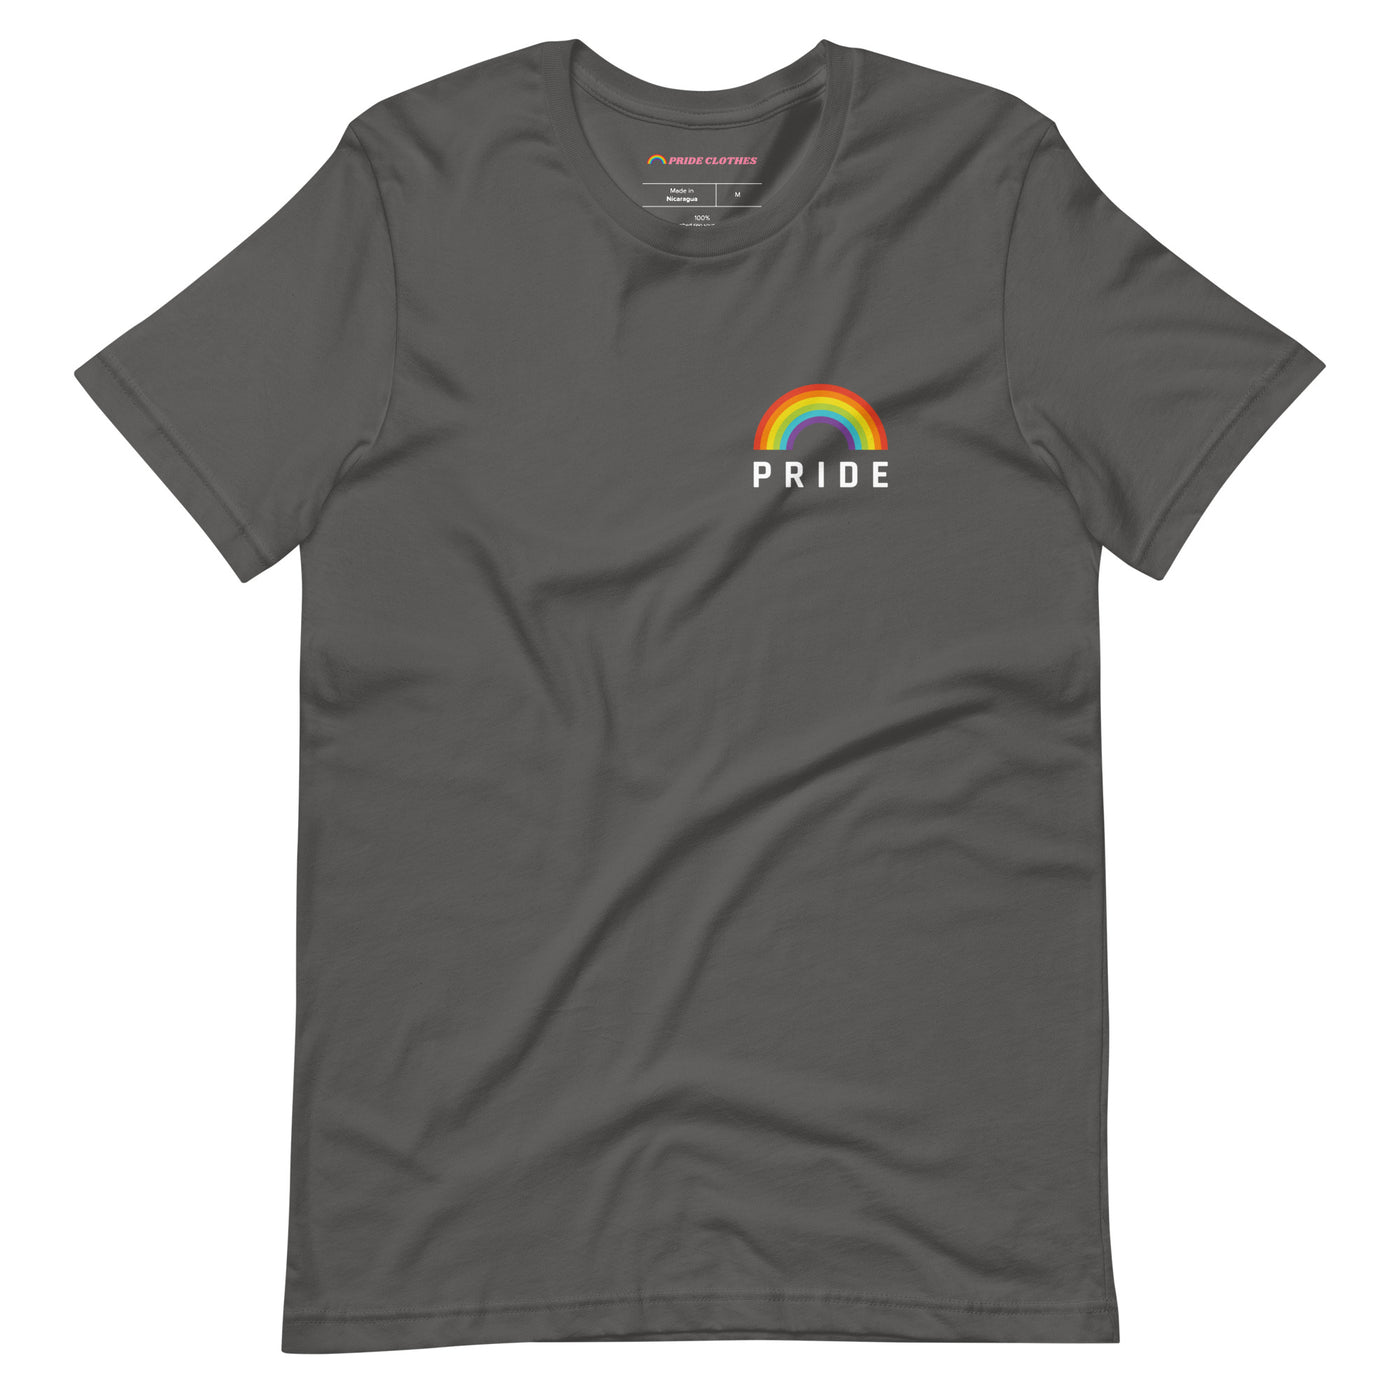 Pride Clothes - Got Pride? Astounding Rainbow Pride Clothes T-Shirt - Asphalt